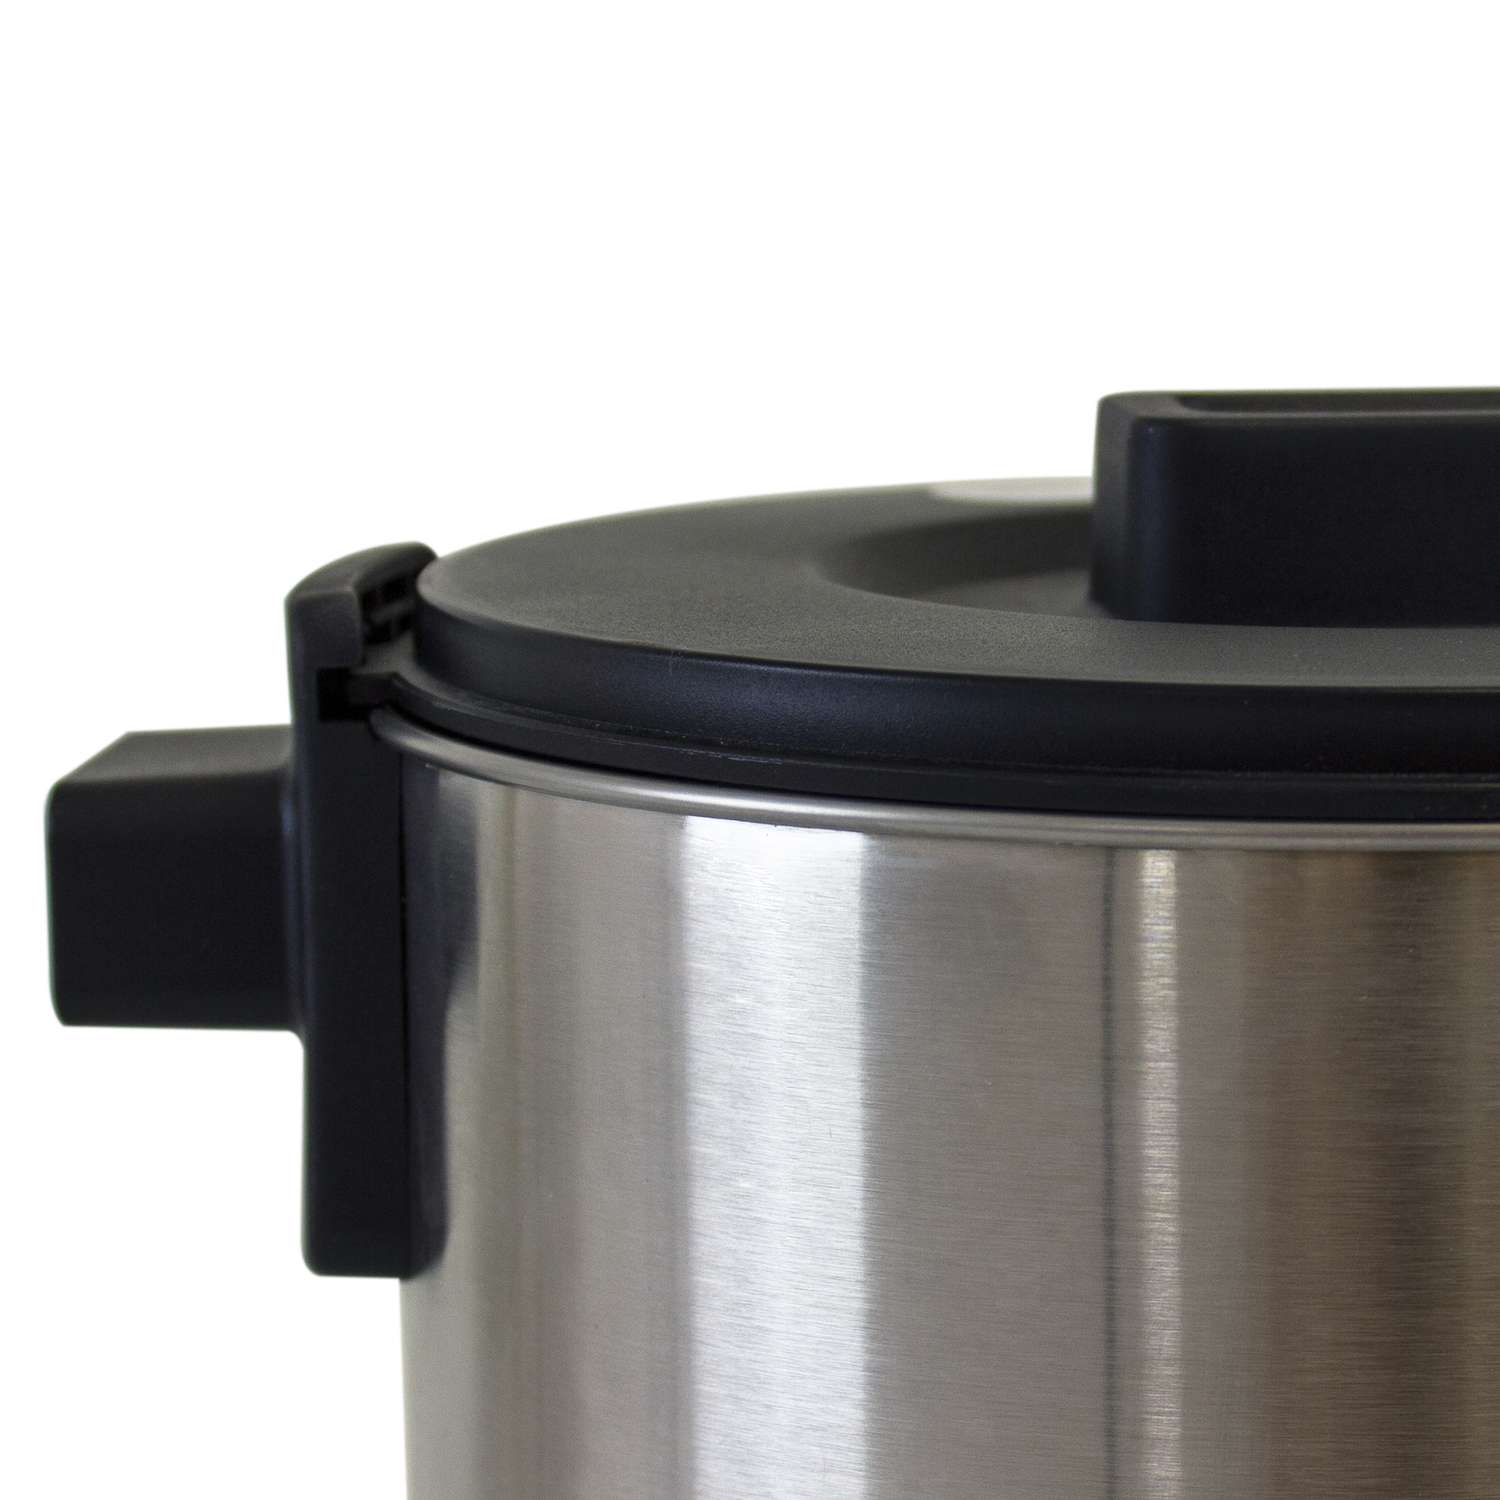 Nesco CU-30 30-Cup Stainless Steel Coffee Urn